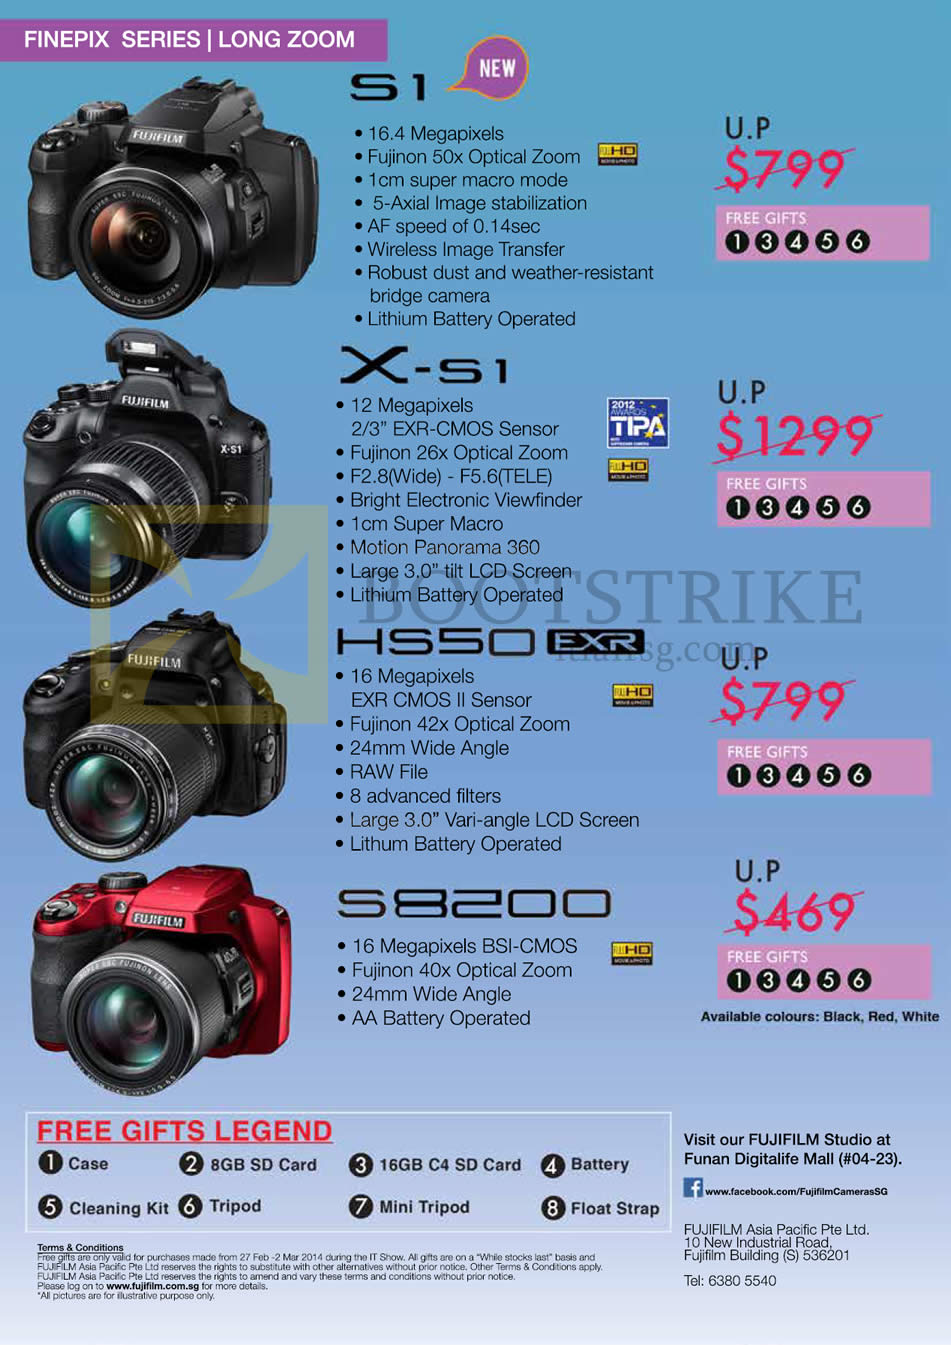 IT SHOW 2014 price list image brochure of Fujifilm Digital Cameras (No Prices) S1, X-S1, HS50 EXR, S8200